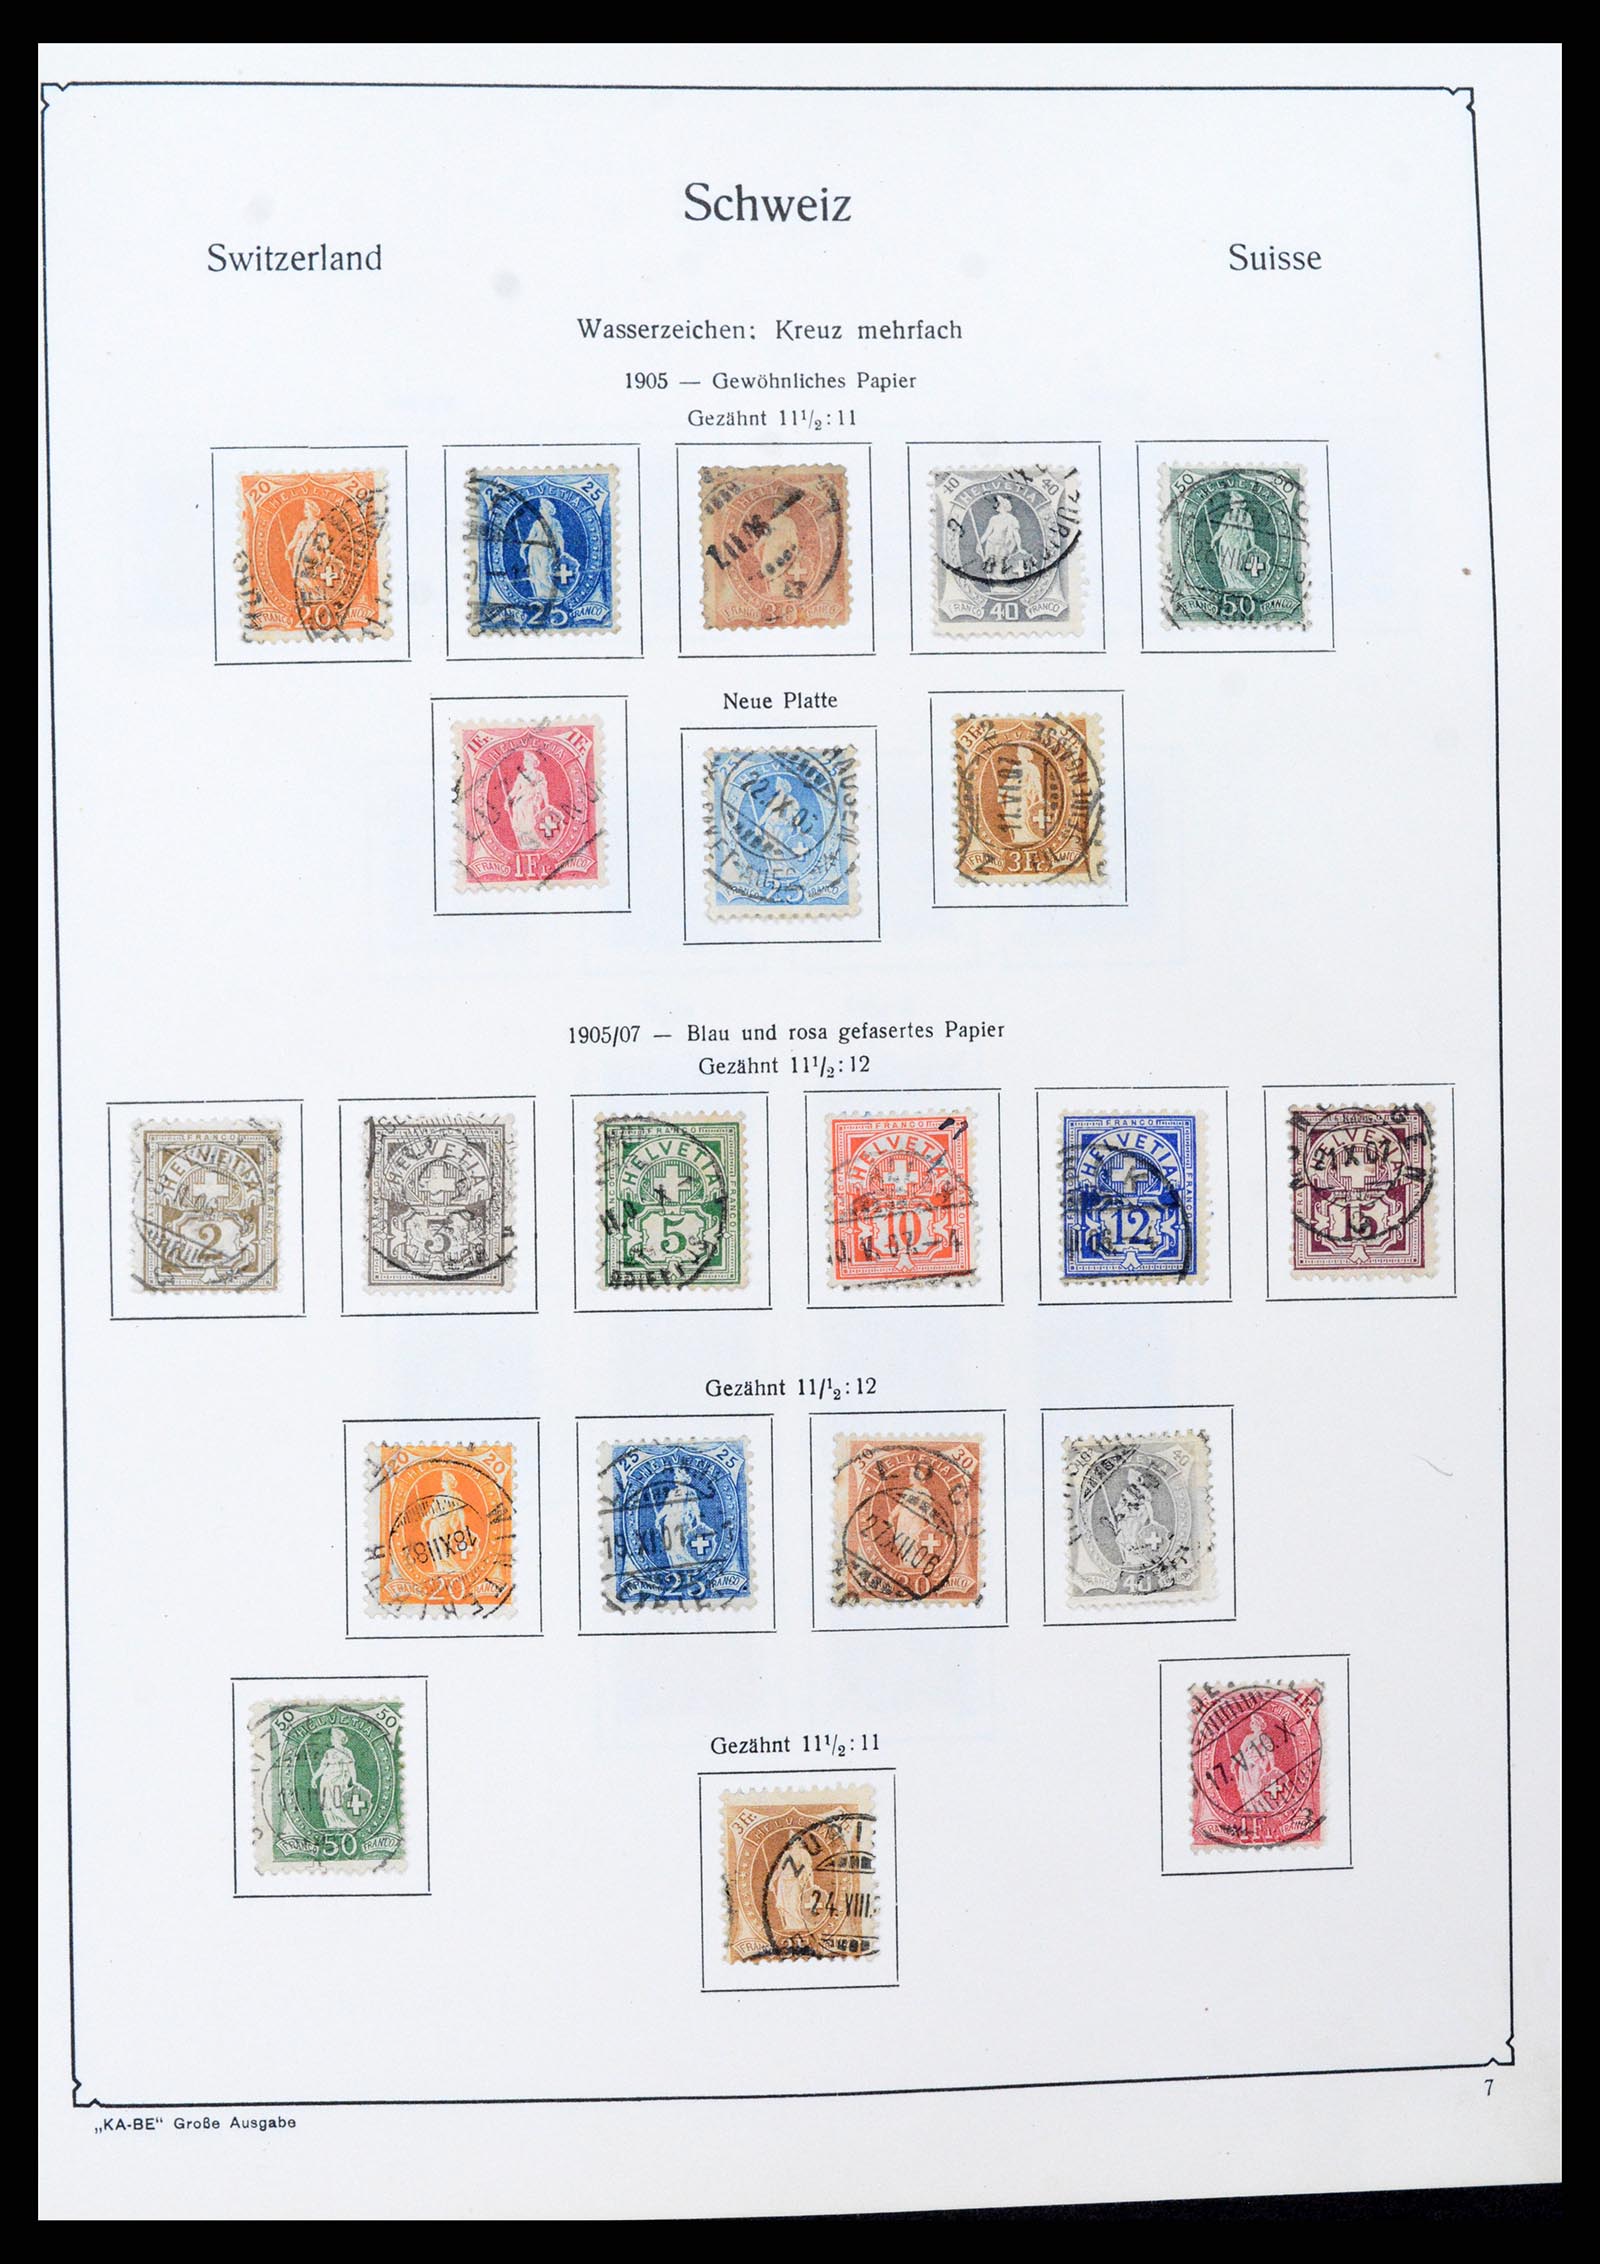 37588 006 - Stamp collection 37588 Switzerland 1854-1974.